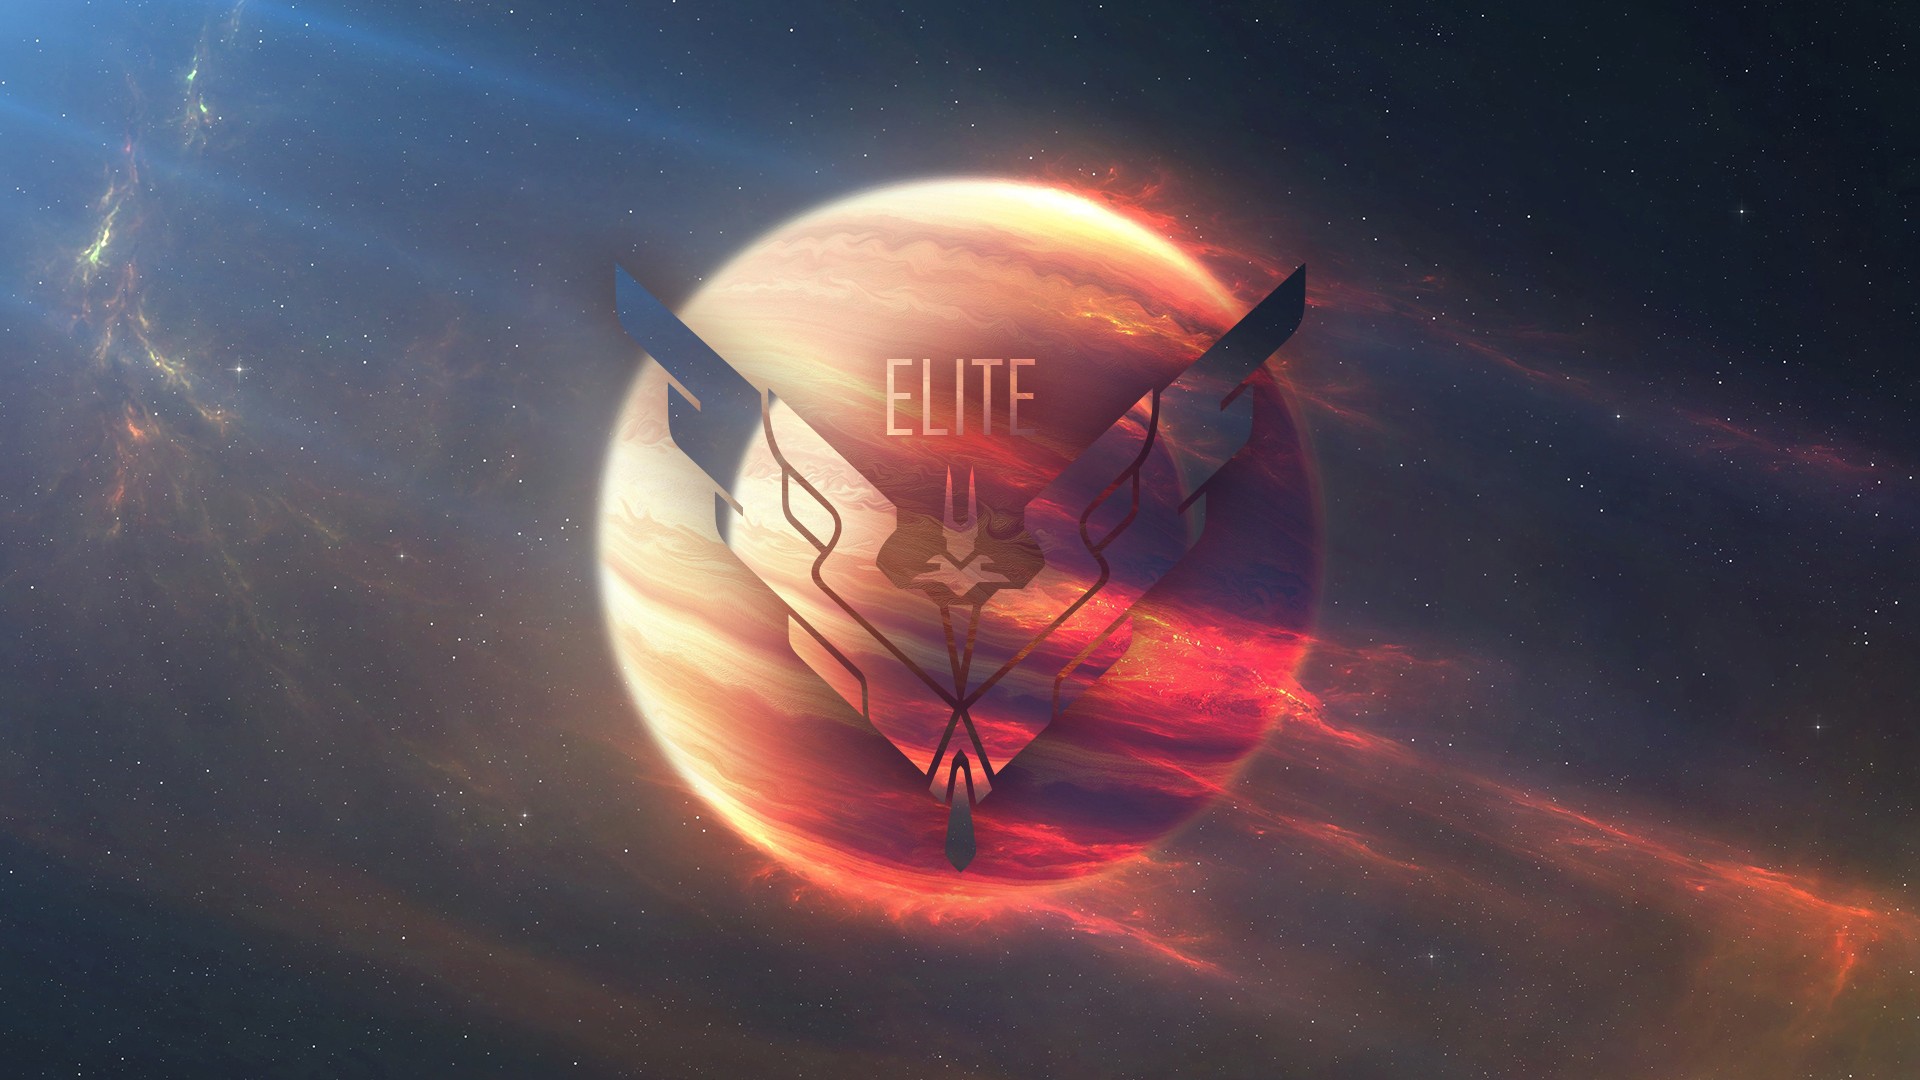 General 1920x1080 Elite video games space planet logo stars